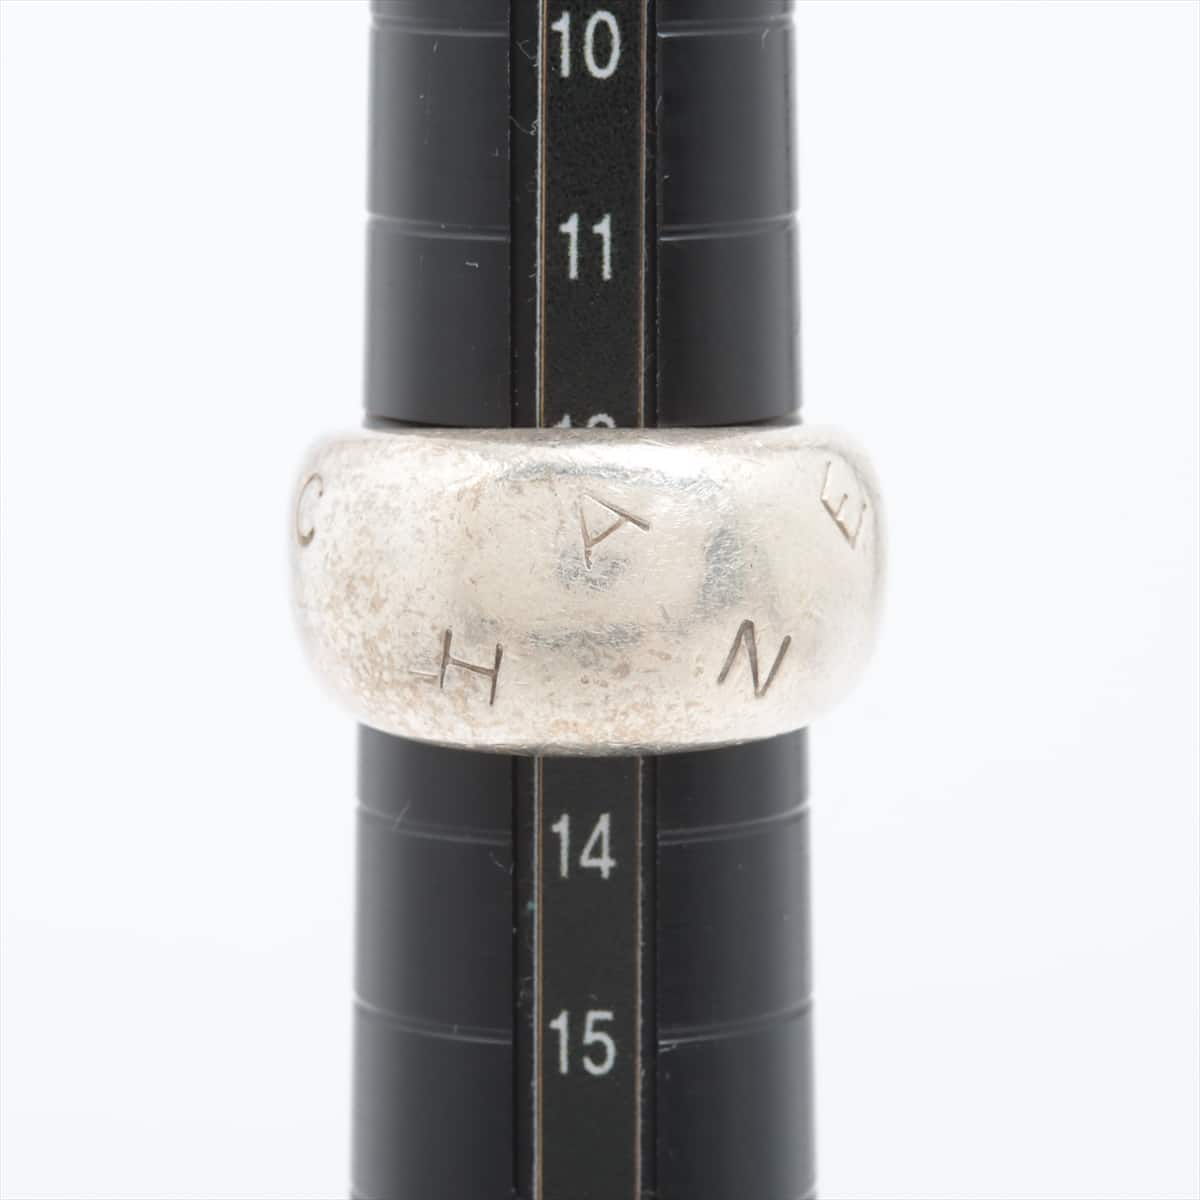 Chanel Logo rings 925 16.4g Silver